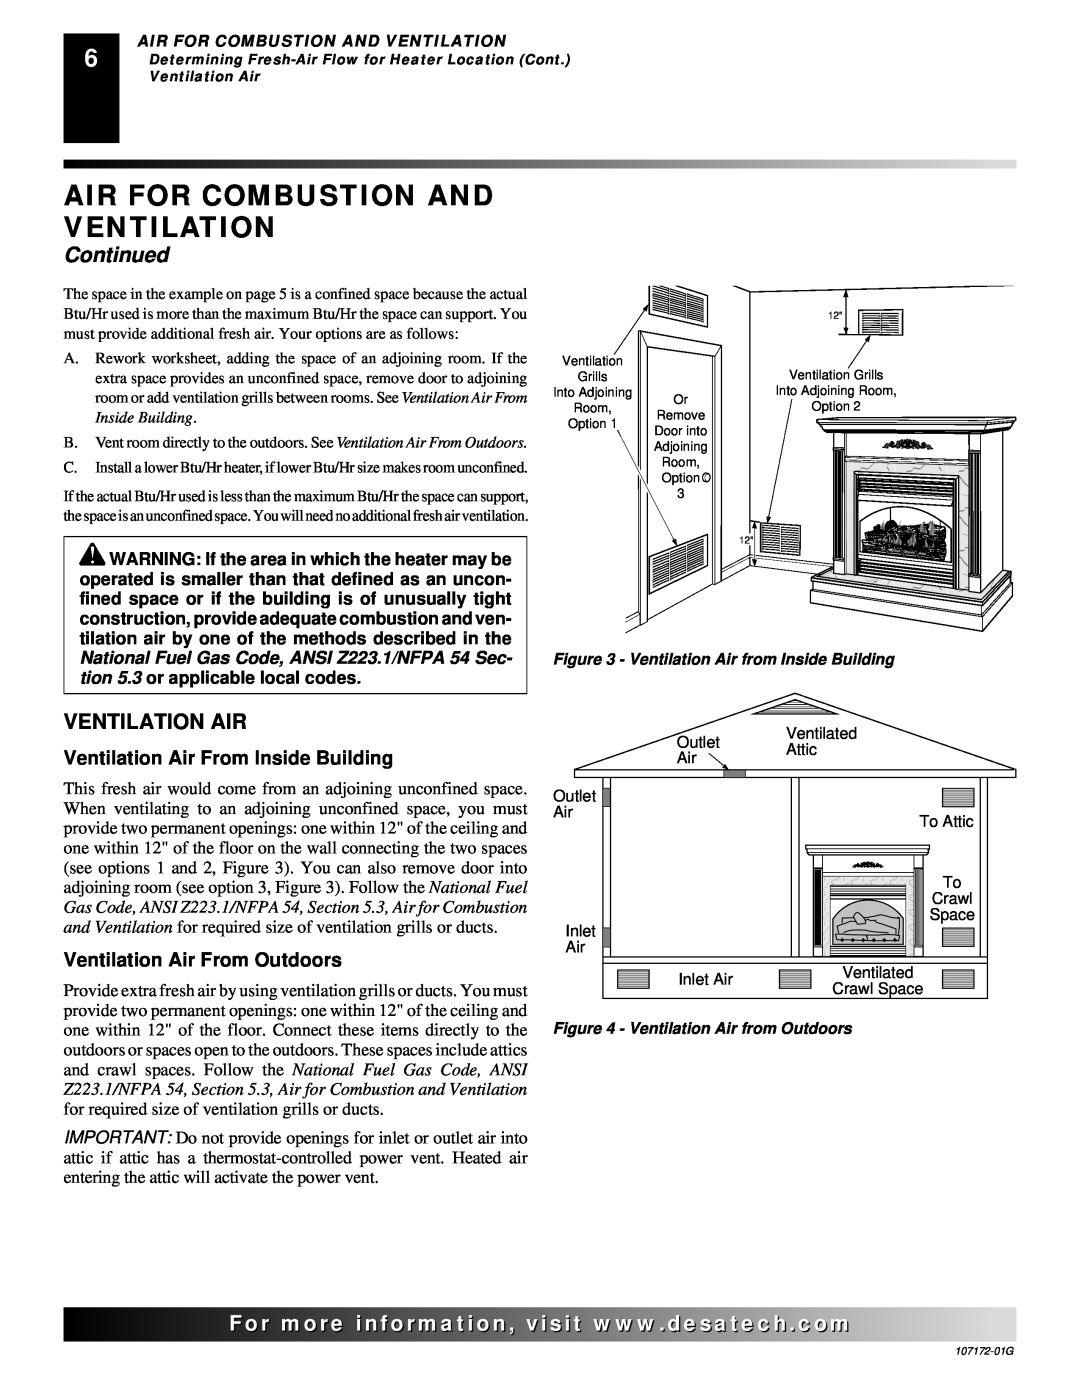 Desa VSGF33PRA Ventilation Air From Inside Building, Ventilation Air From Outdoors, Air For Combustion And Ventilation 